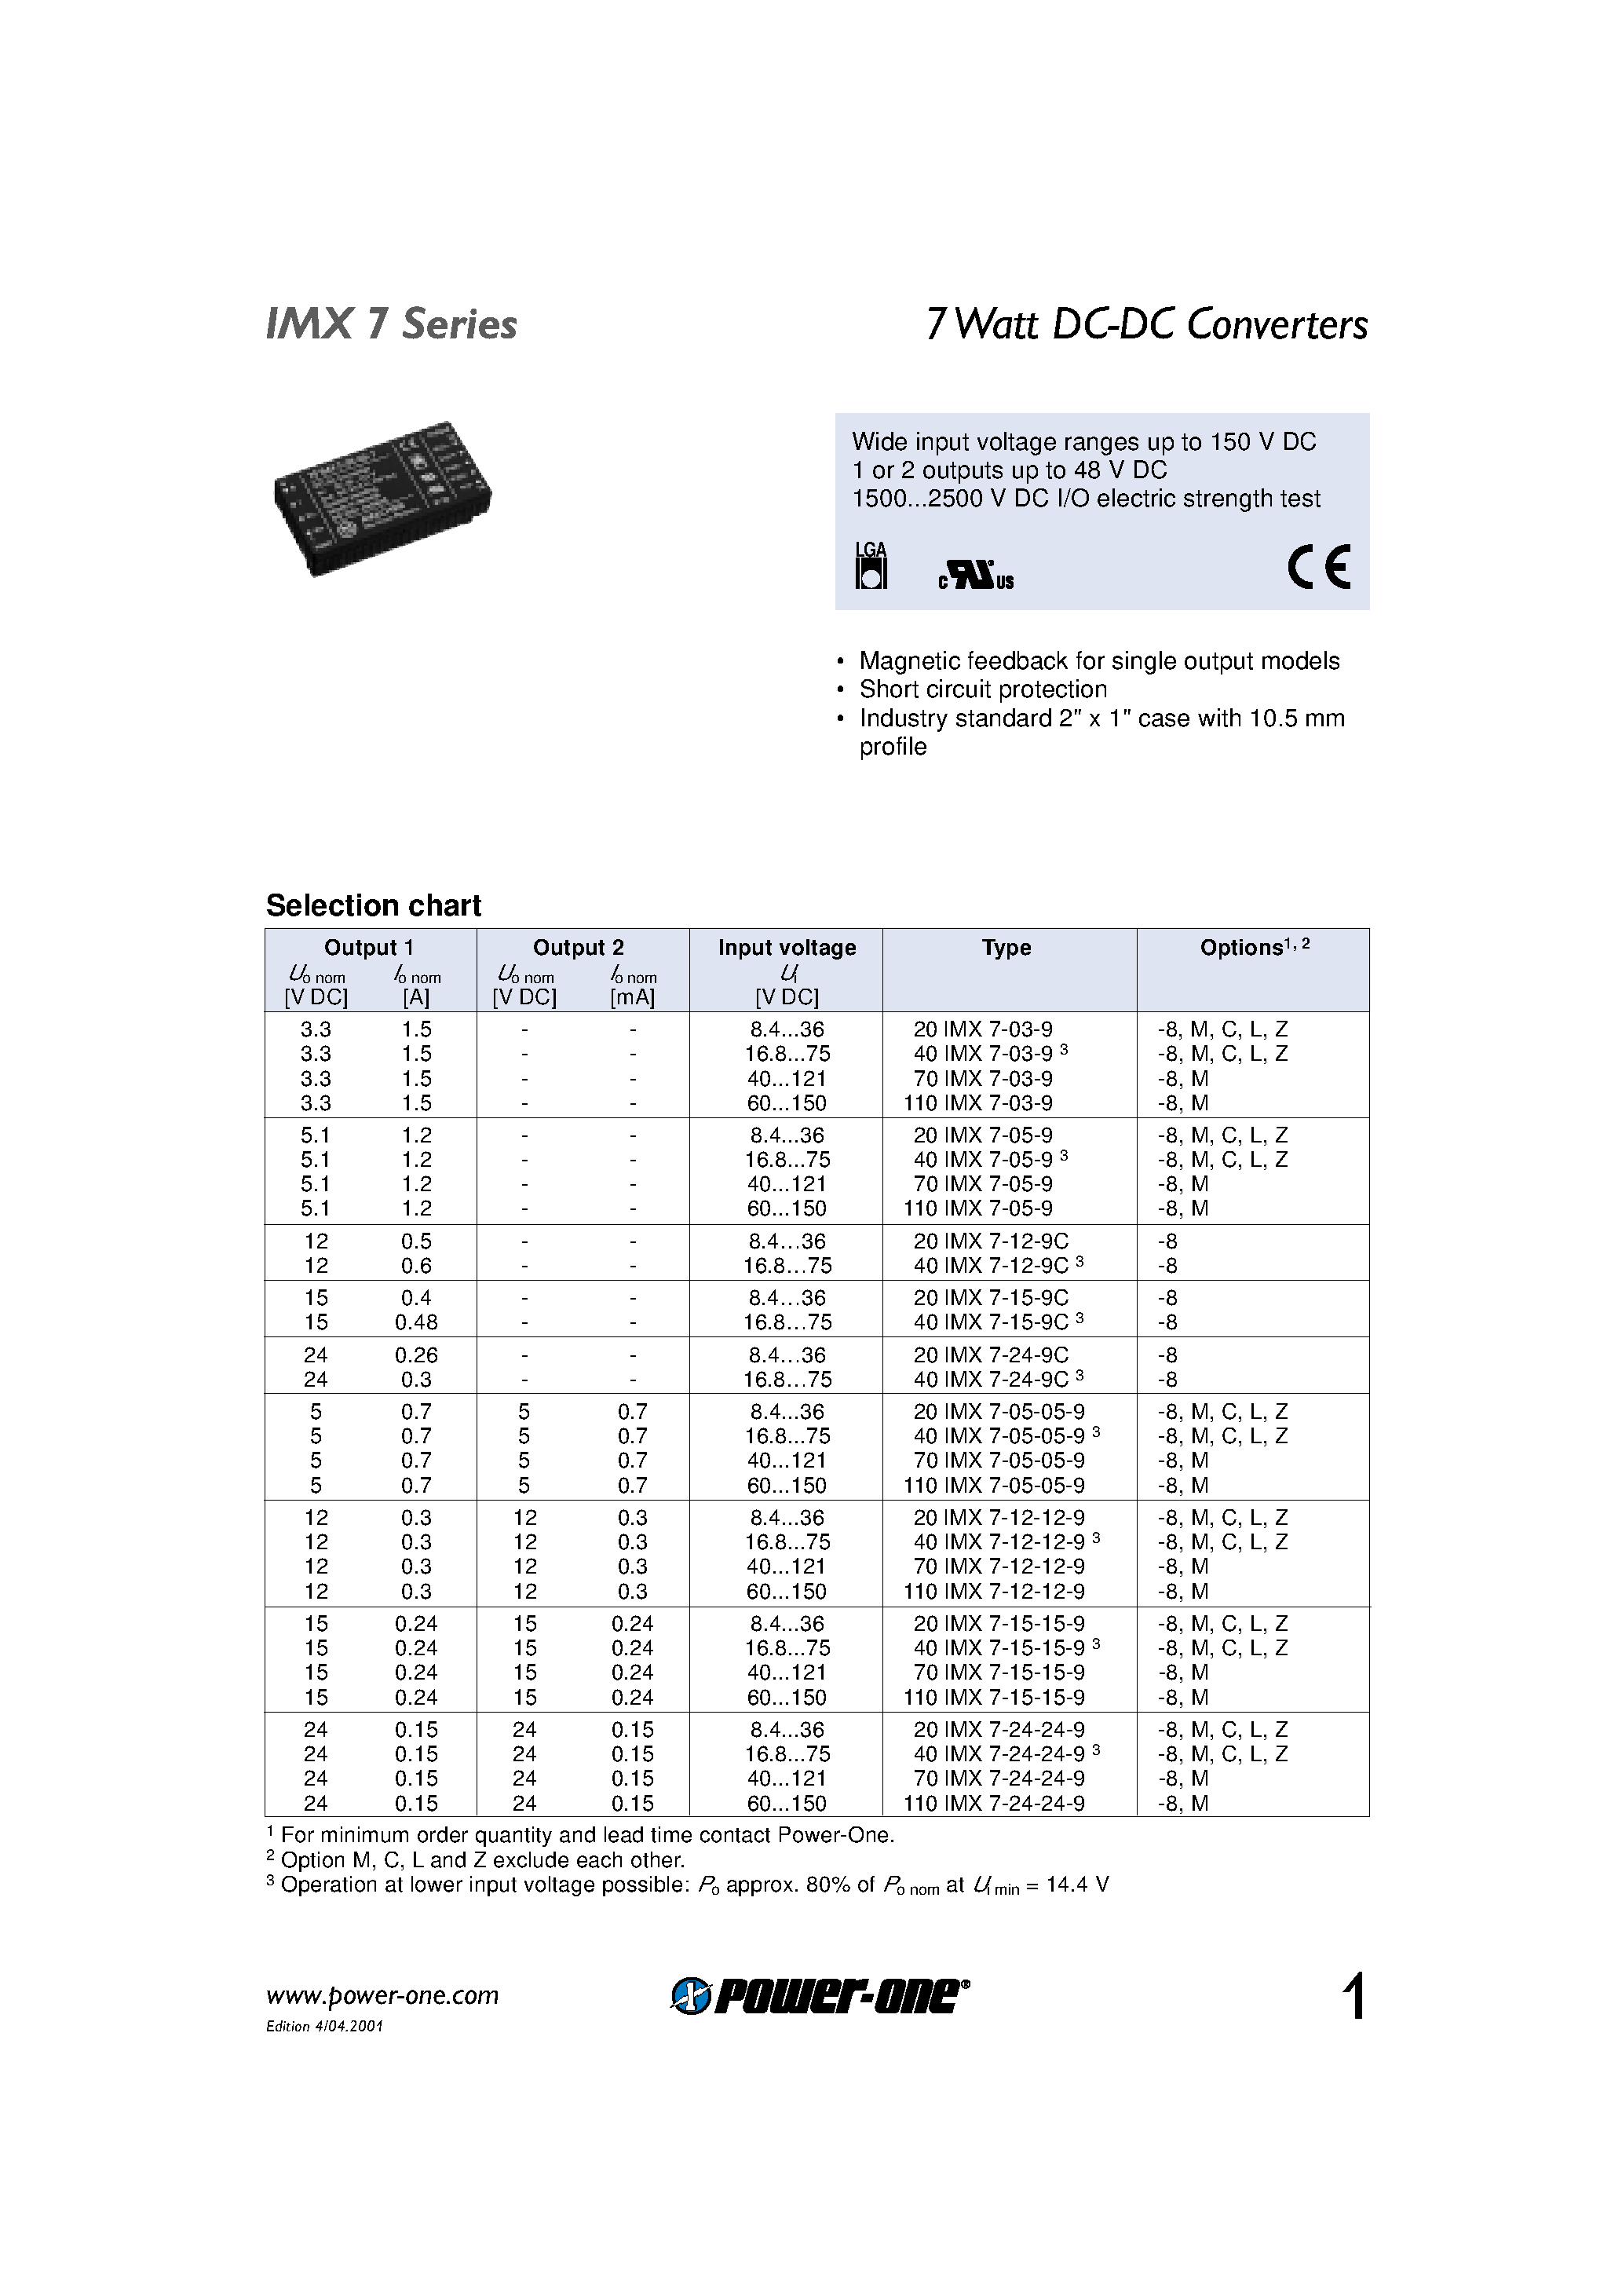 Datasheet 70IMX7-15-15-9 - 7 Watt DC-DC Converters page 1